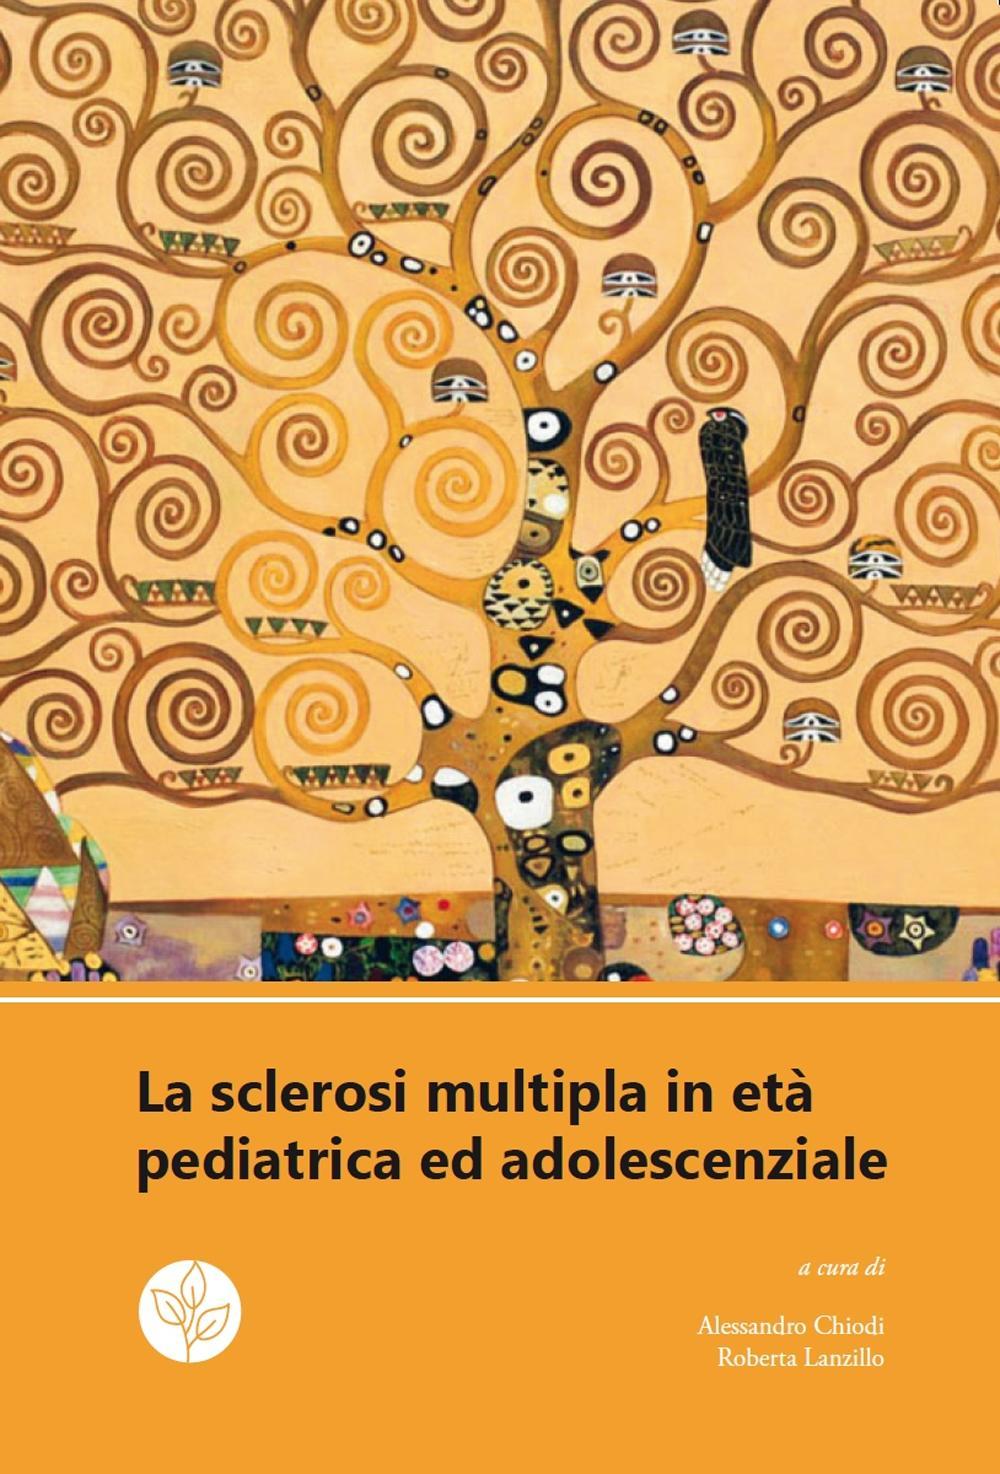 La sclerosi multipla in età pediatrica ed edolescenziale